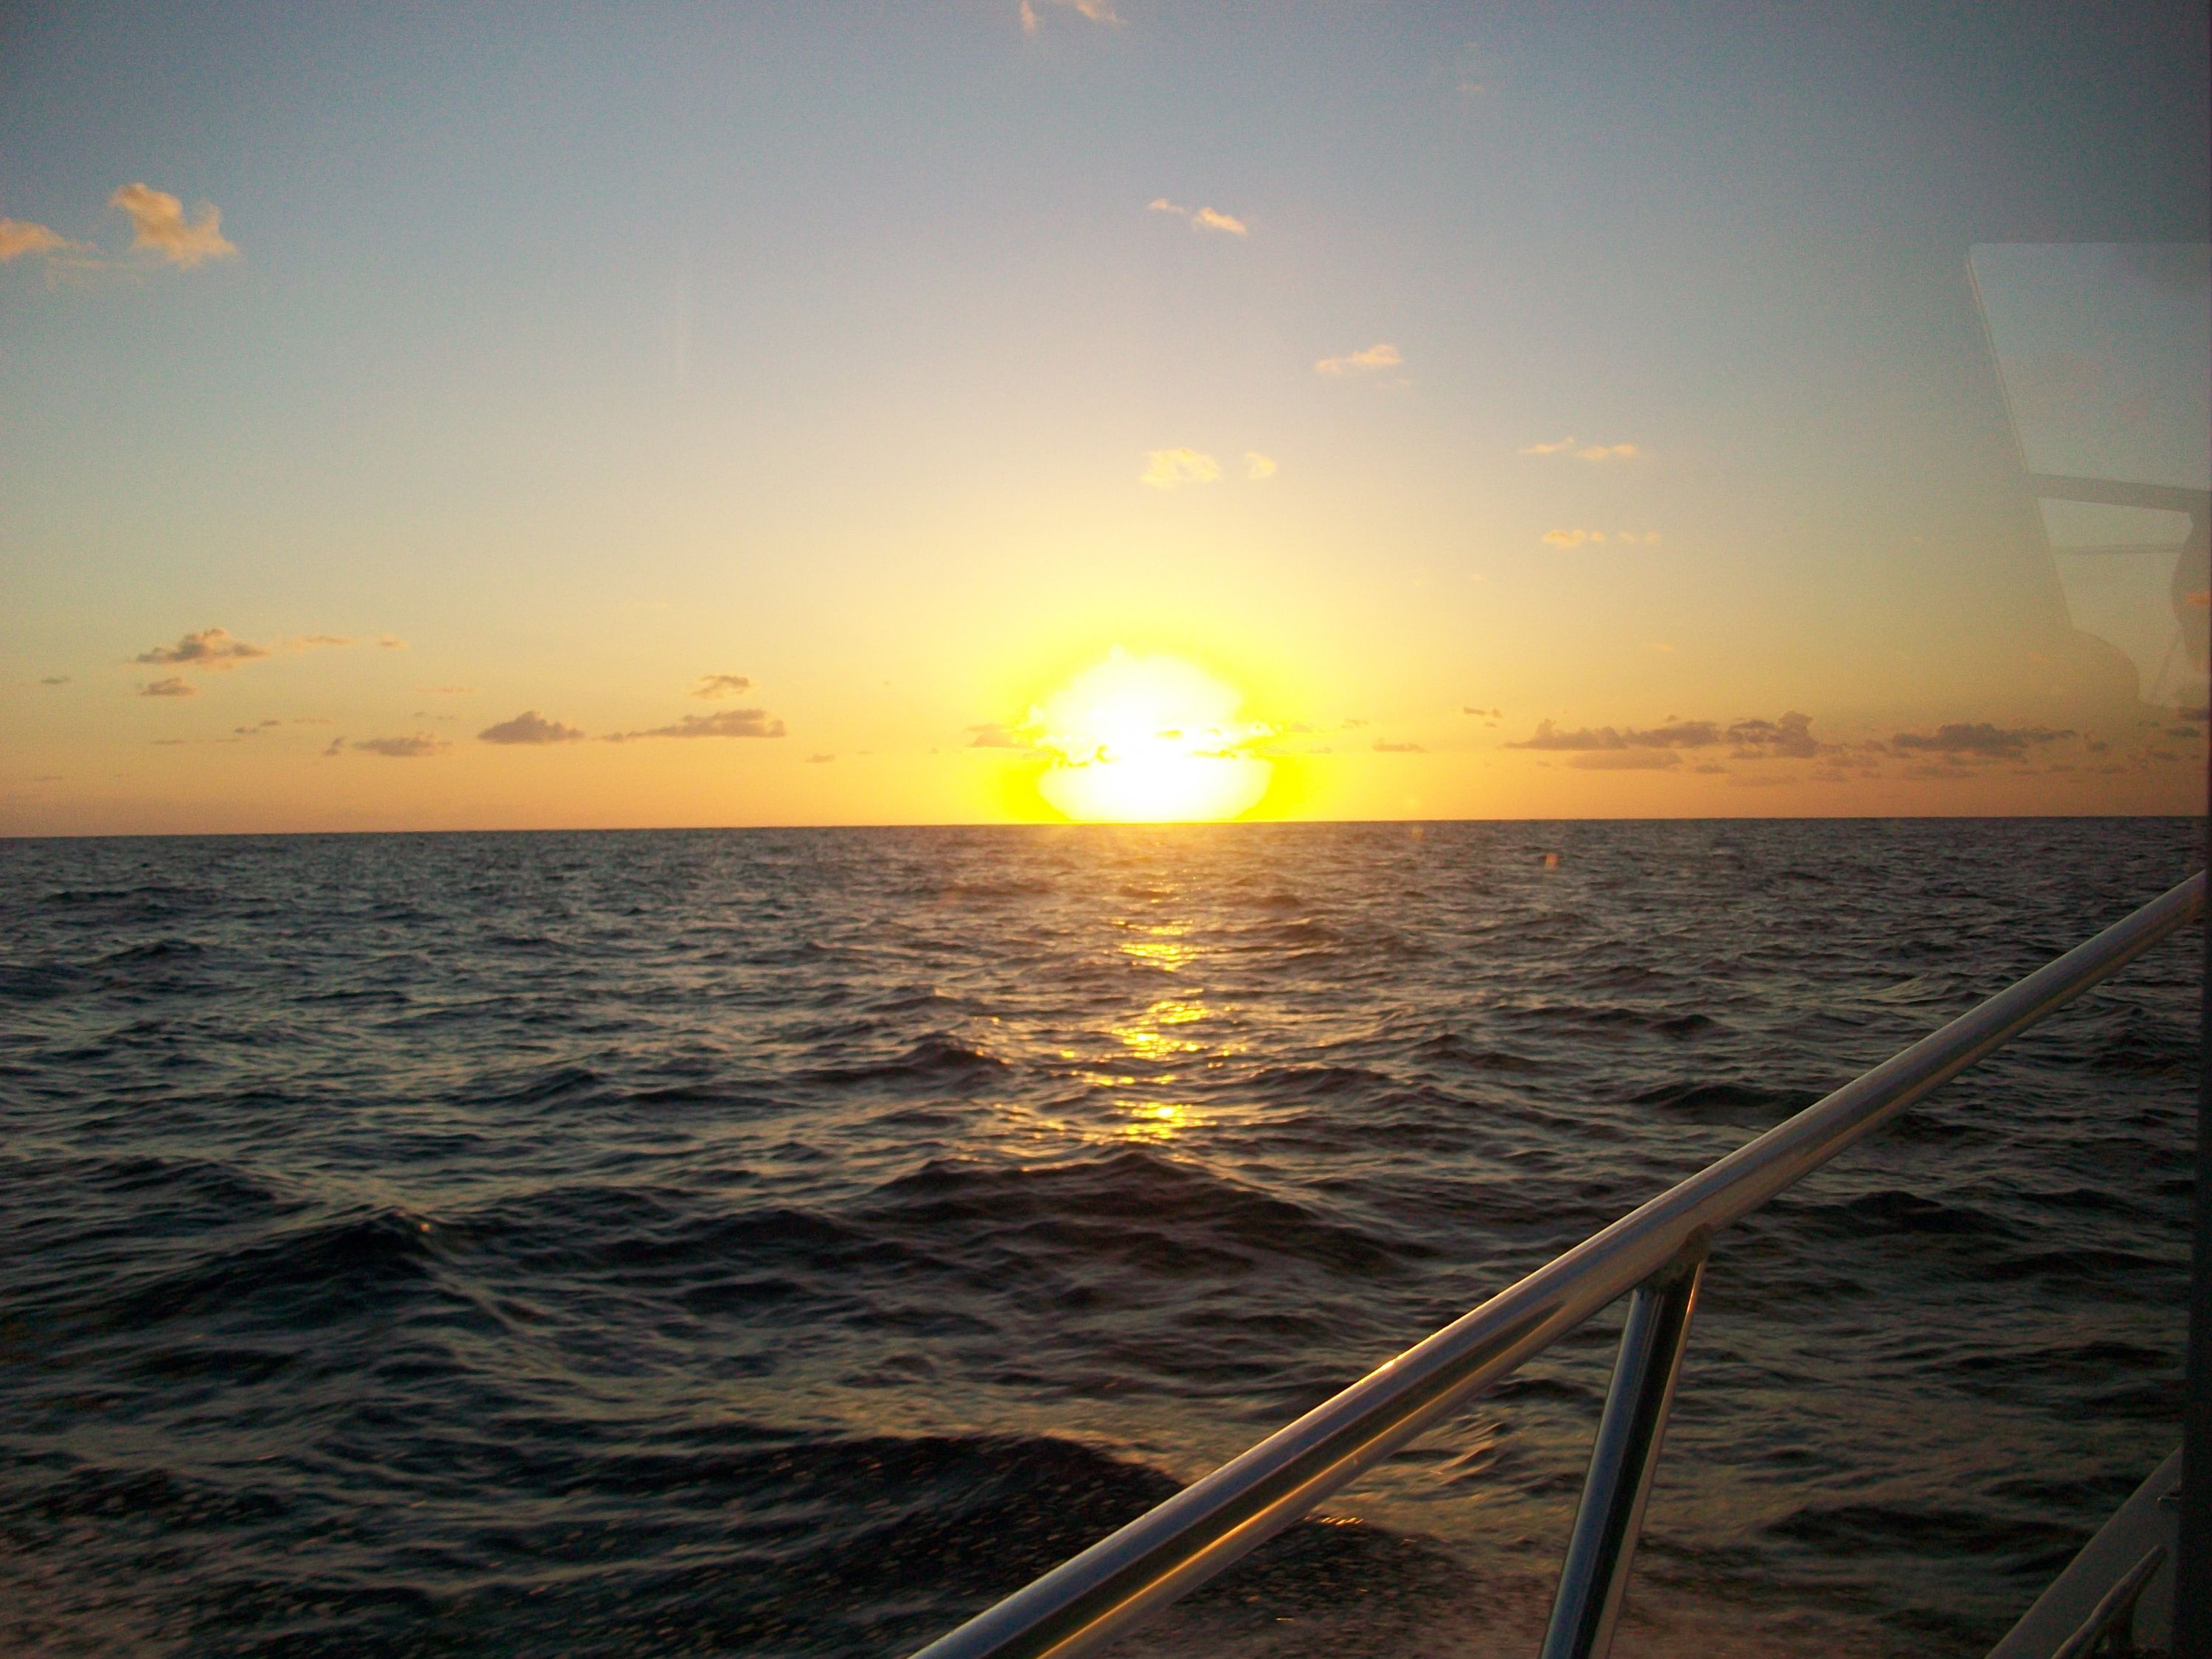 Sunrise over the Caribbean Ocean